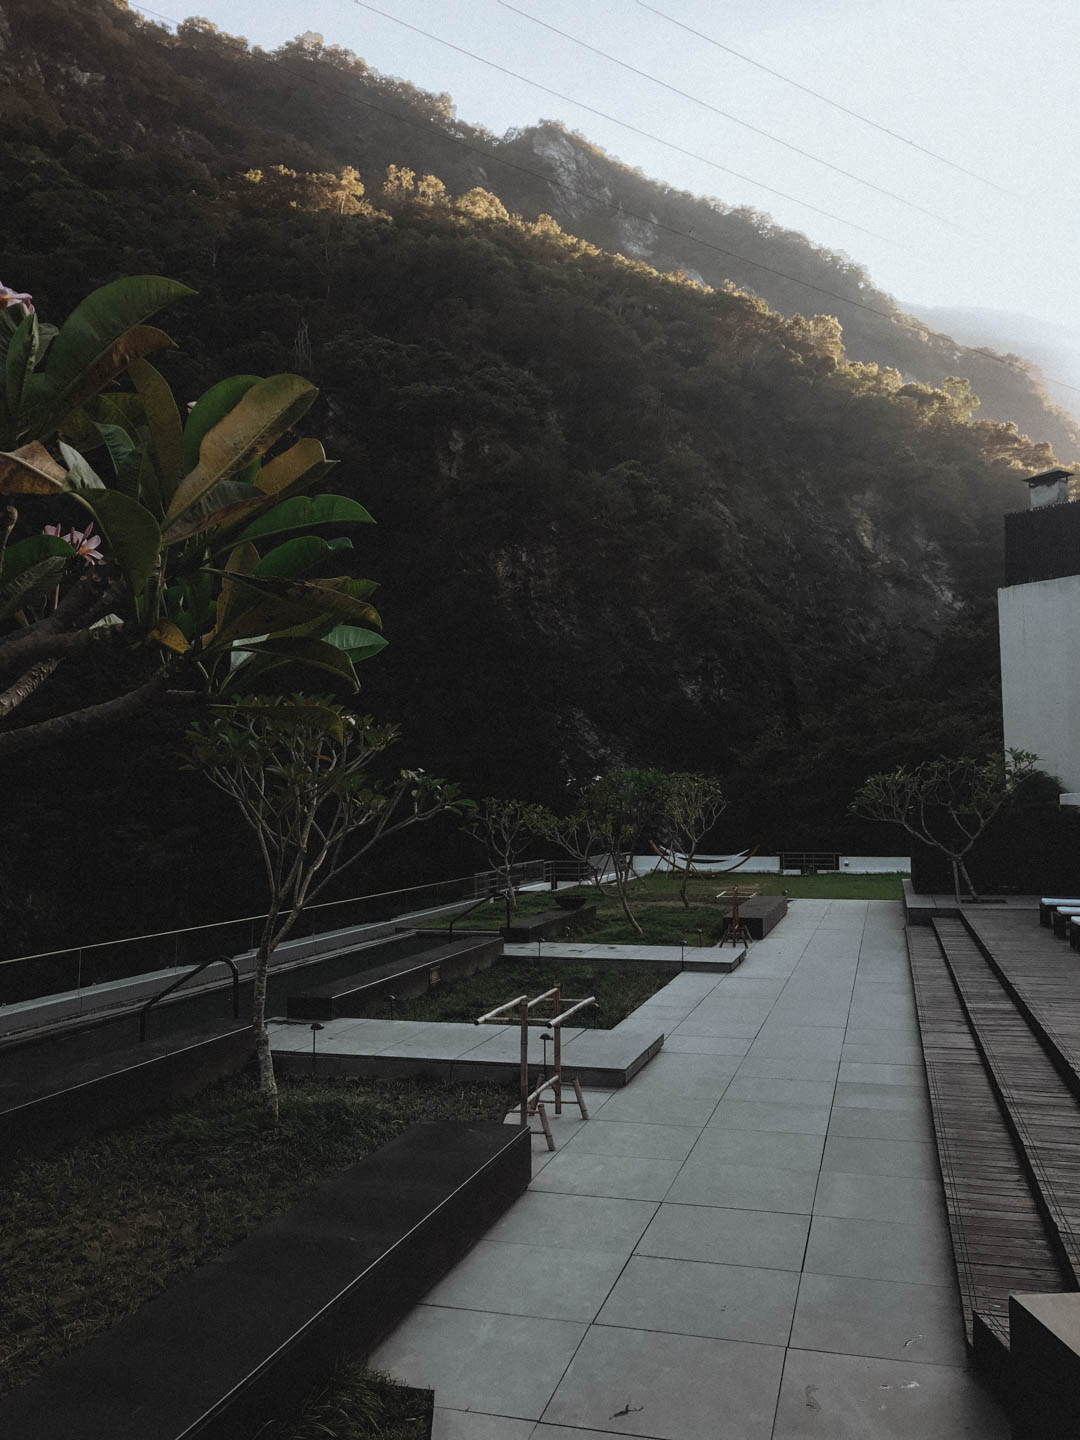 Taroko-national-park-taiwan-hotel-silks-place-pool-rooftop-landscape-nature-3